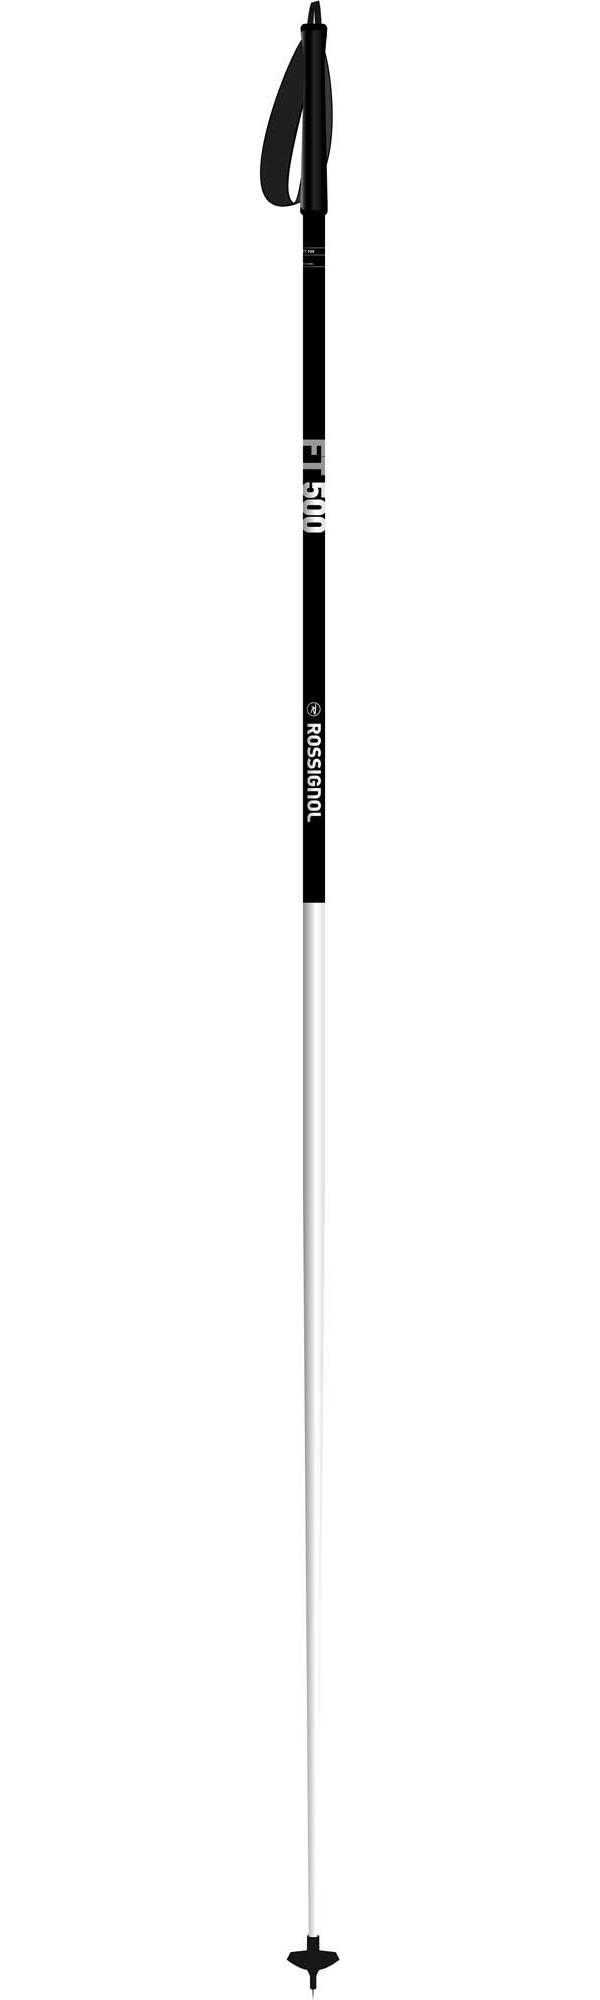 Rossignol FT 500 Ski Poles product image